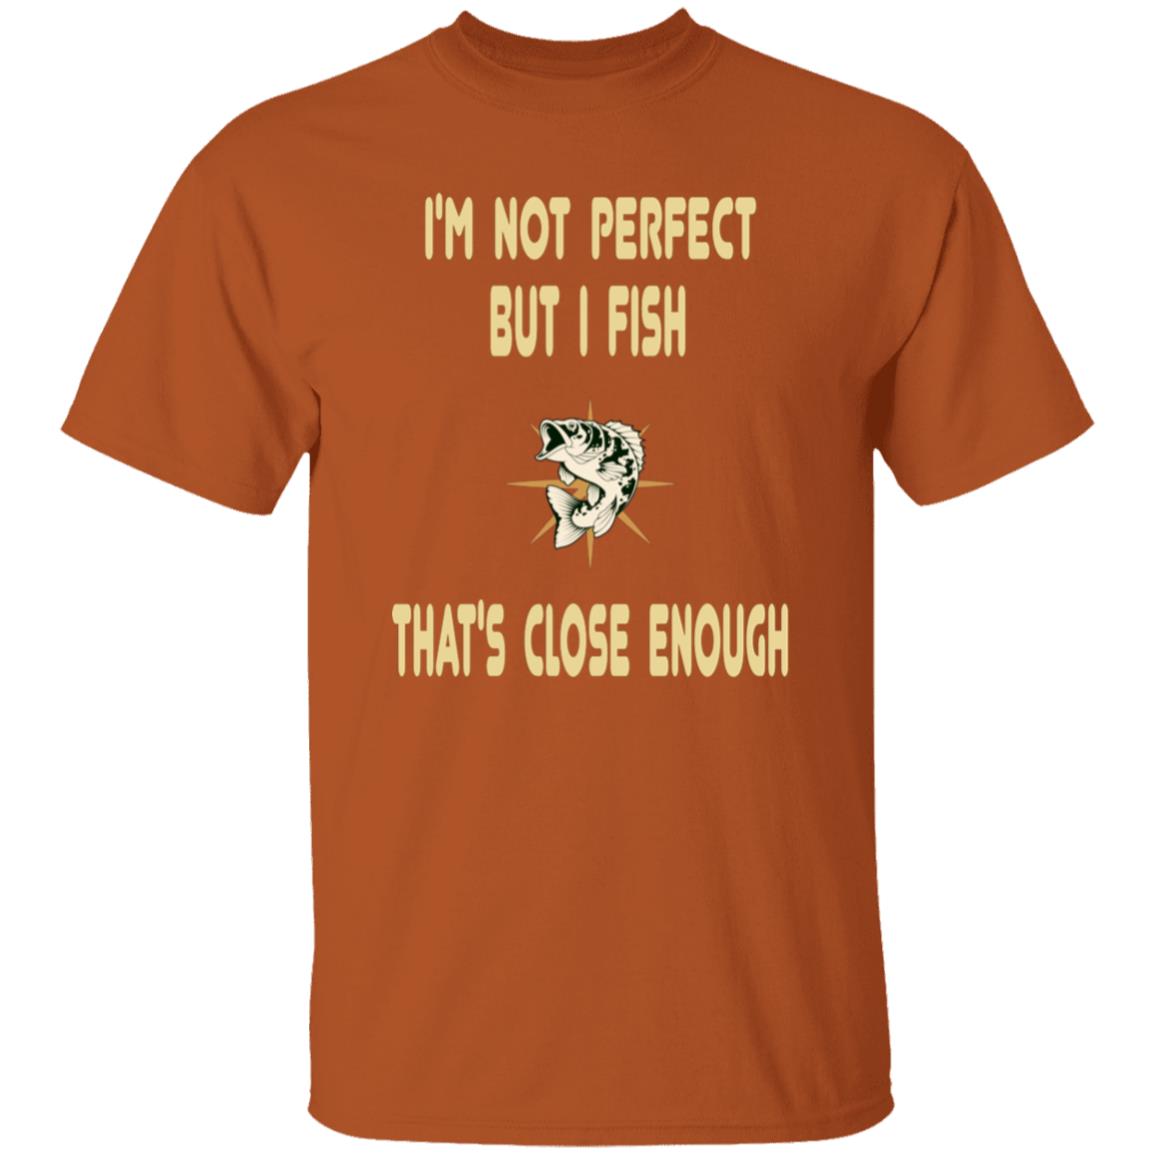 I'm not perfect but I fish that's close enough t-shirt texas-orange